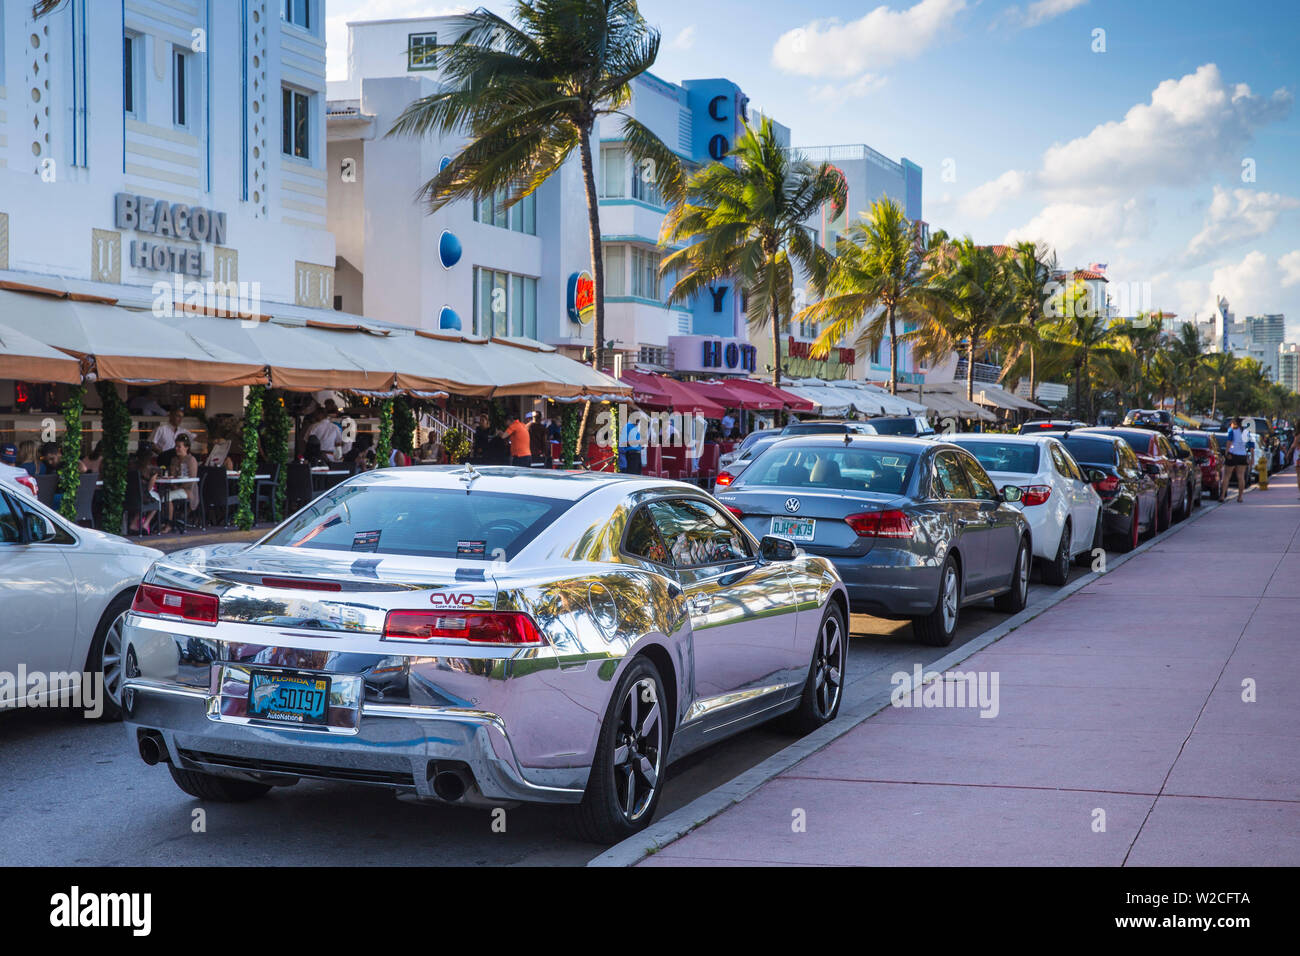 U.S.A, Miami, Miami Beach, South Beach, Art Deco Hotels on Ocean drive Stock Photo